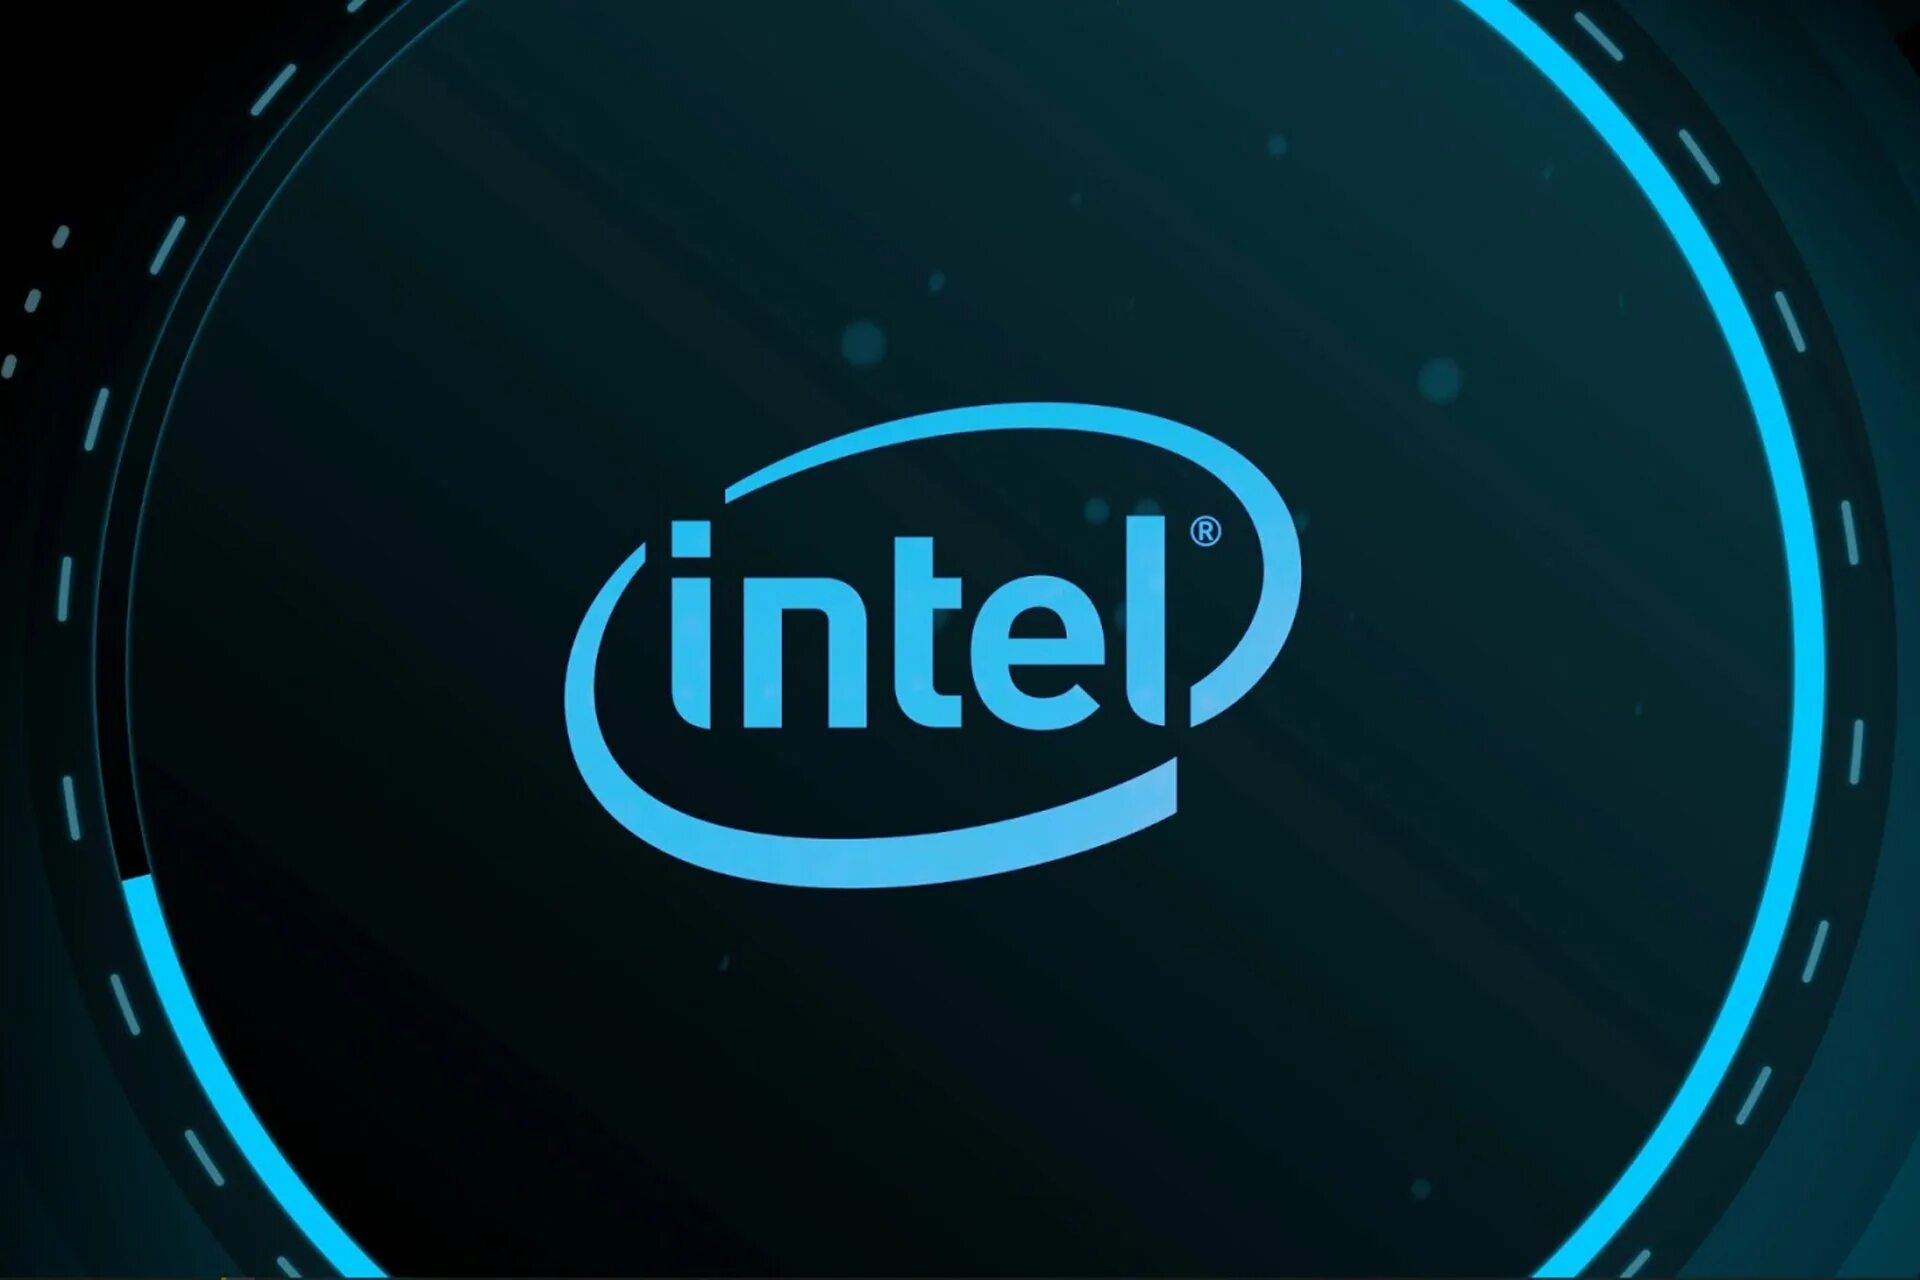 Intel. Заставка Intel. Картинки Intel. Эмблема Интел.